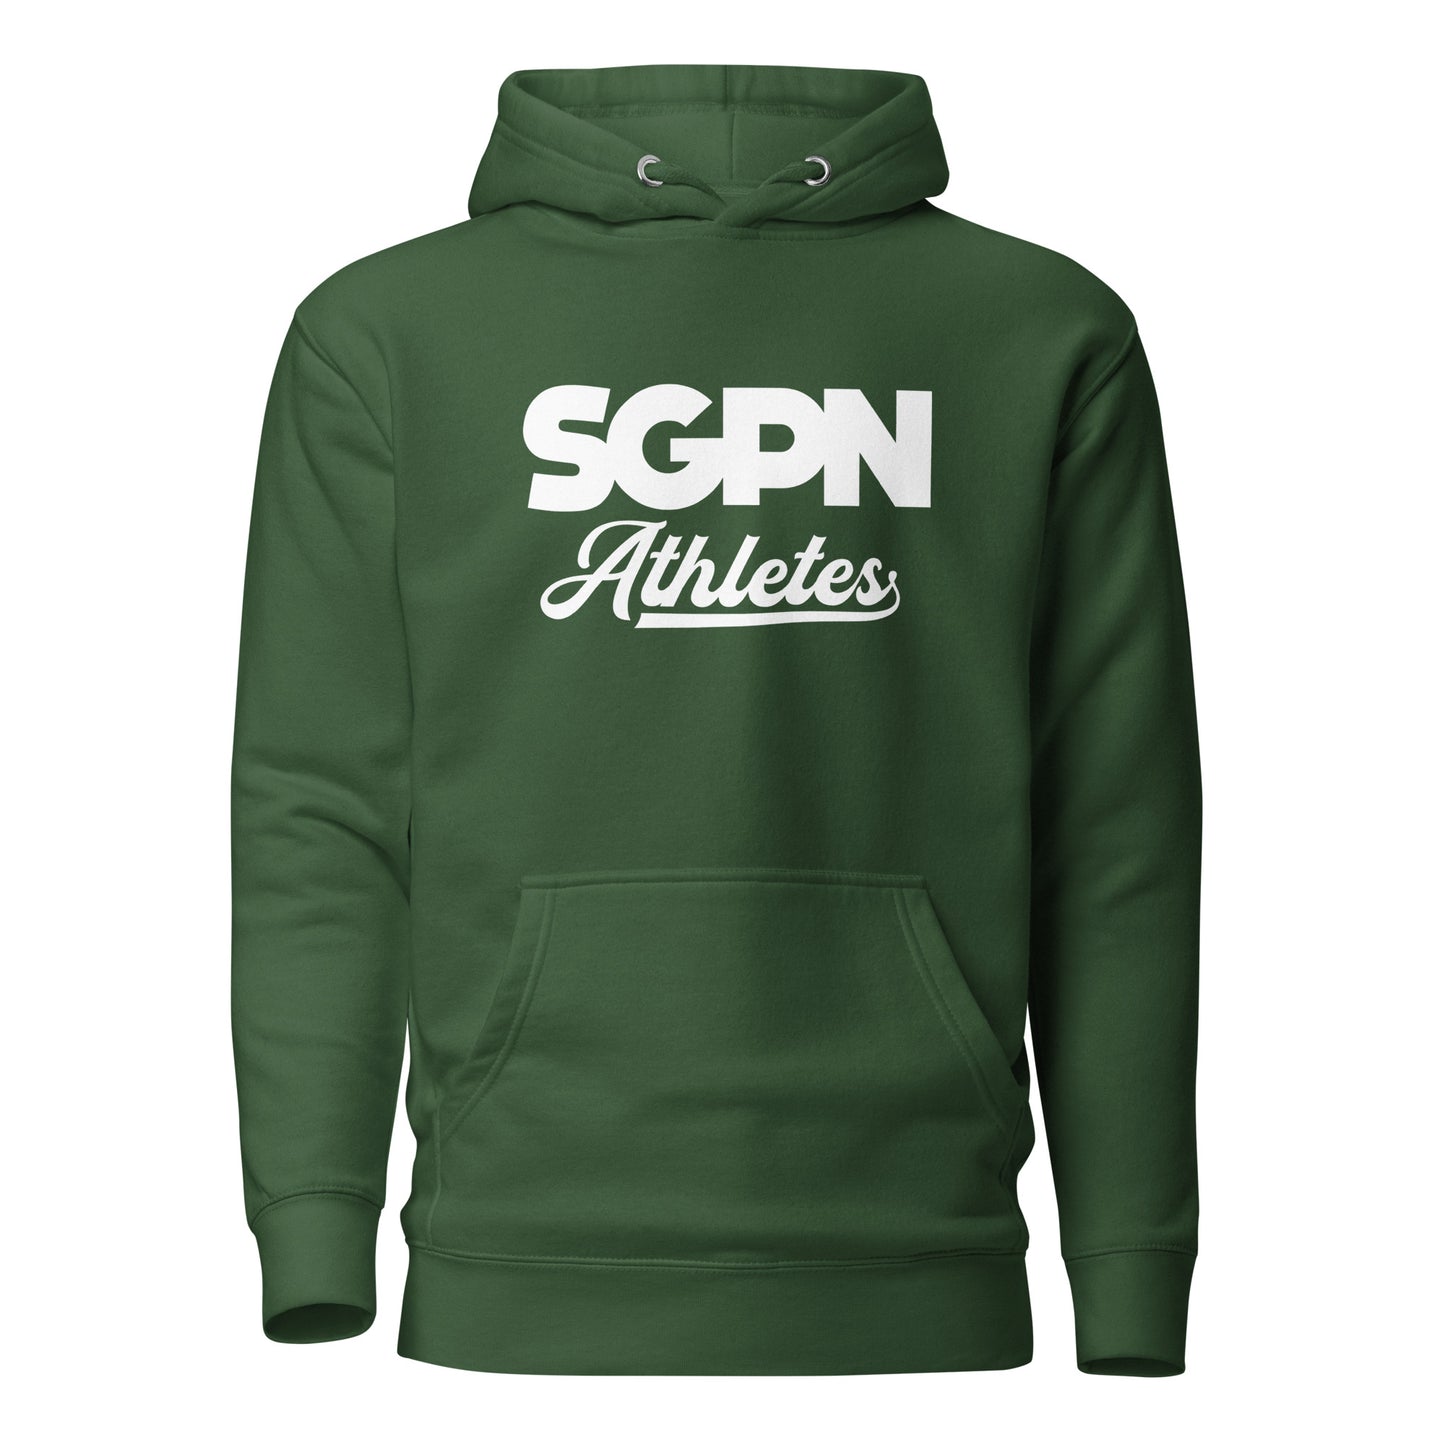 SGPN Athletes - Unisex Hoodie (White Logo)